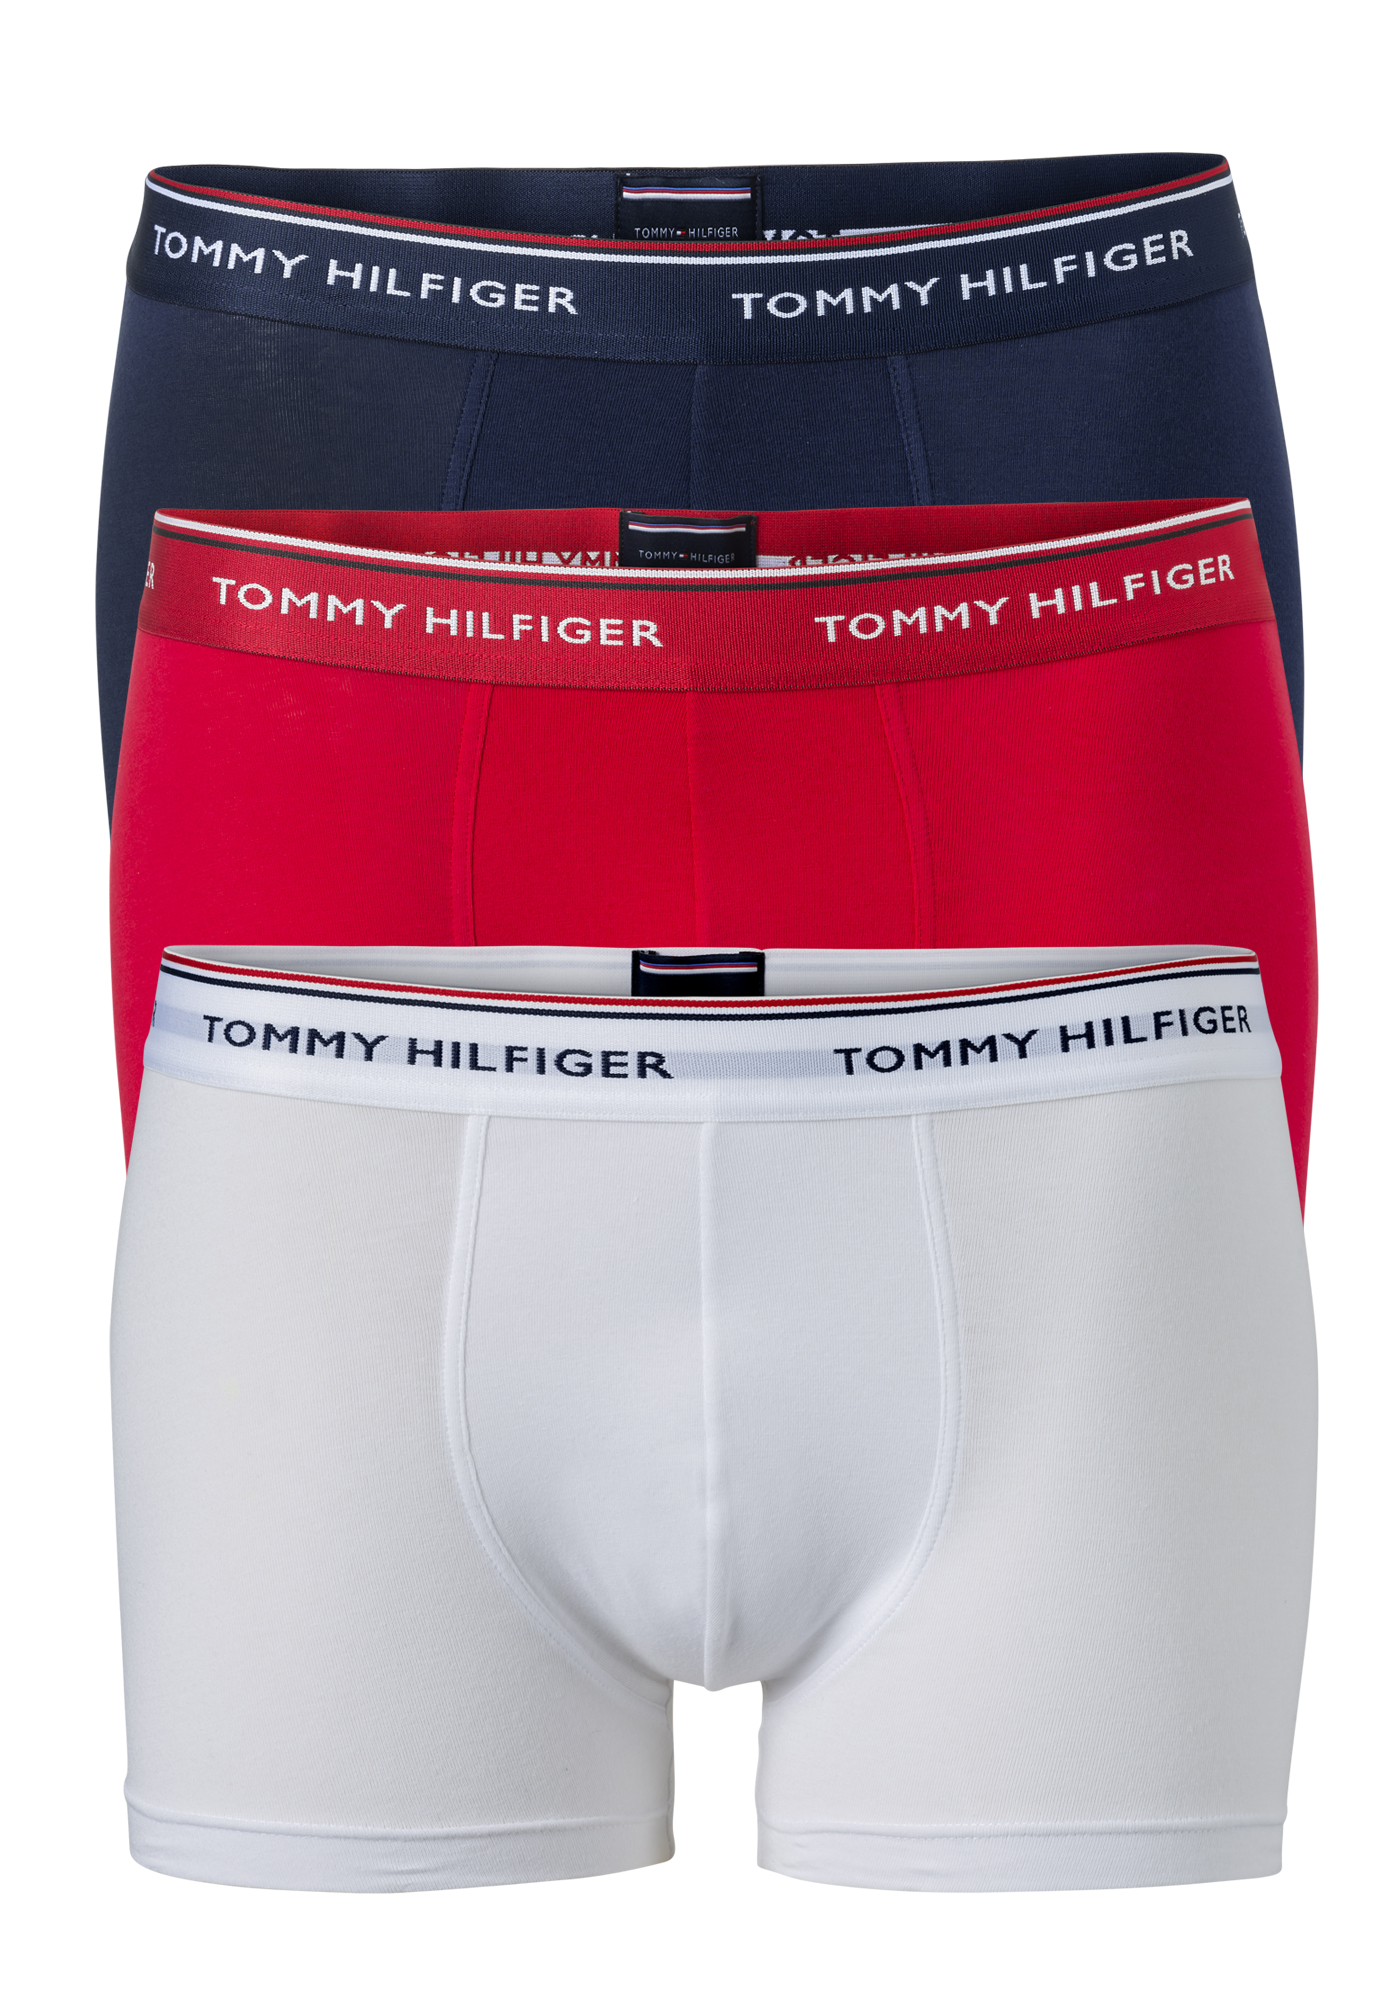 Tommy Hilfiger trunks (3-pack), heren boxers normale lengte, rood, wit en blauw